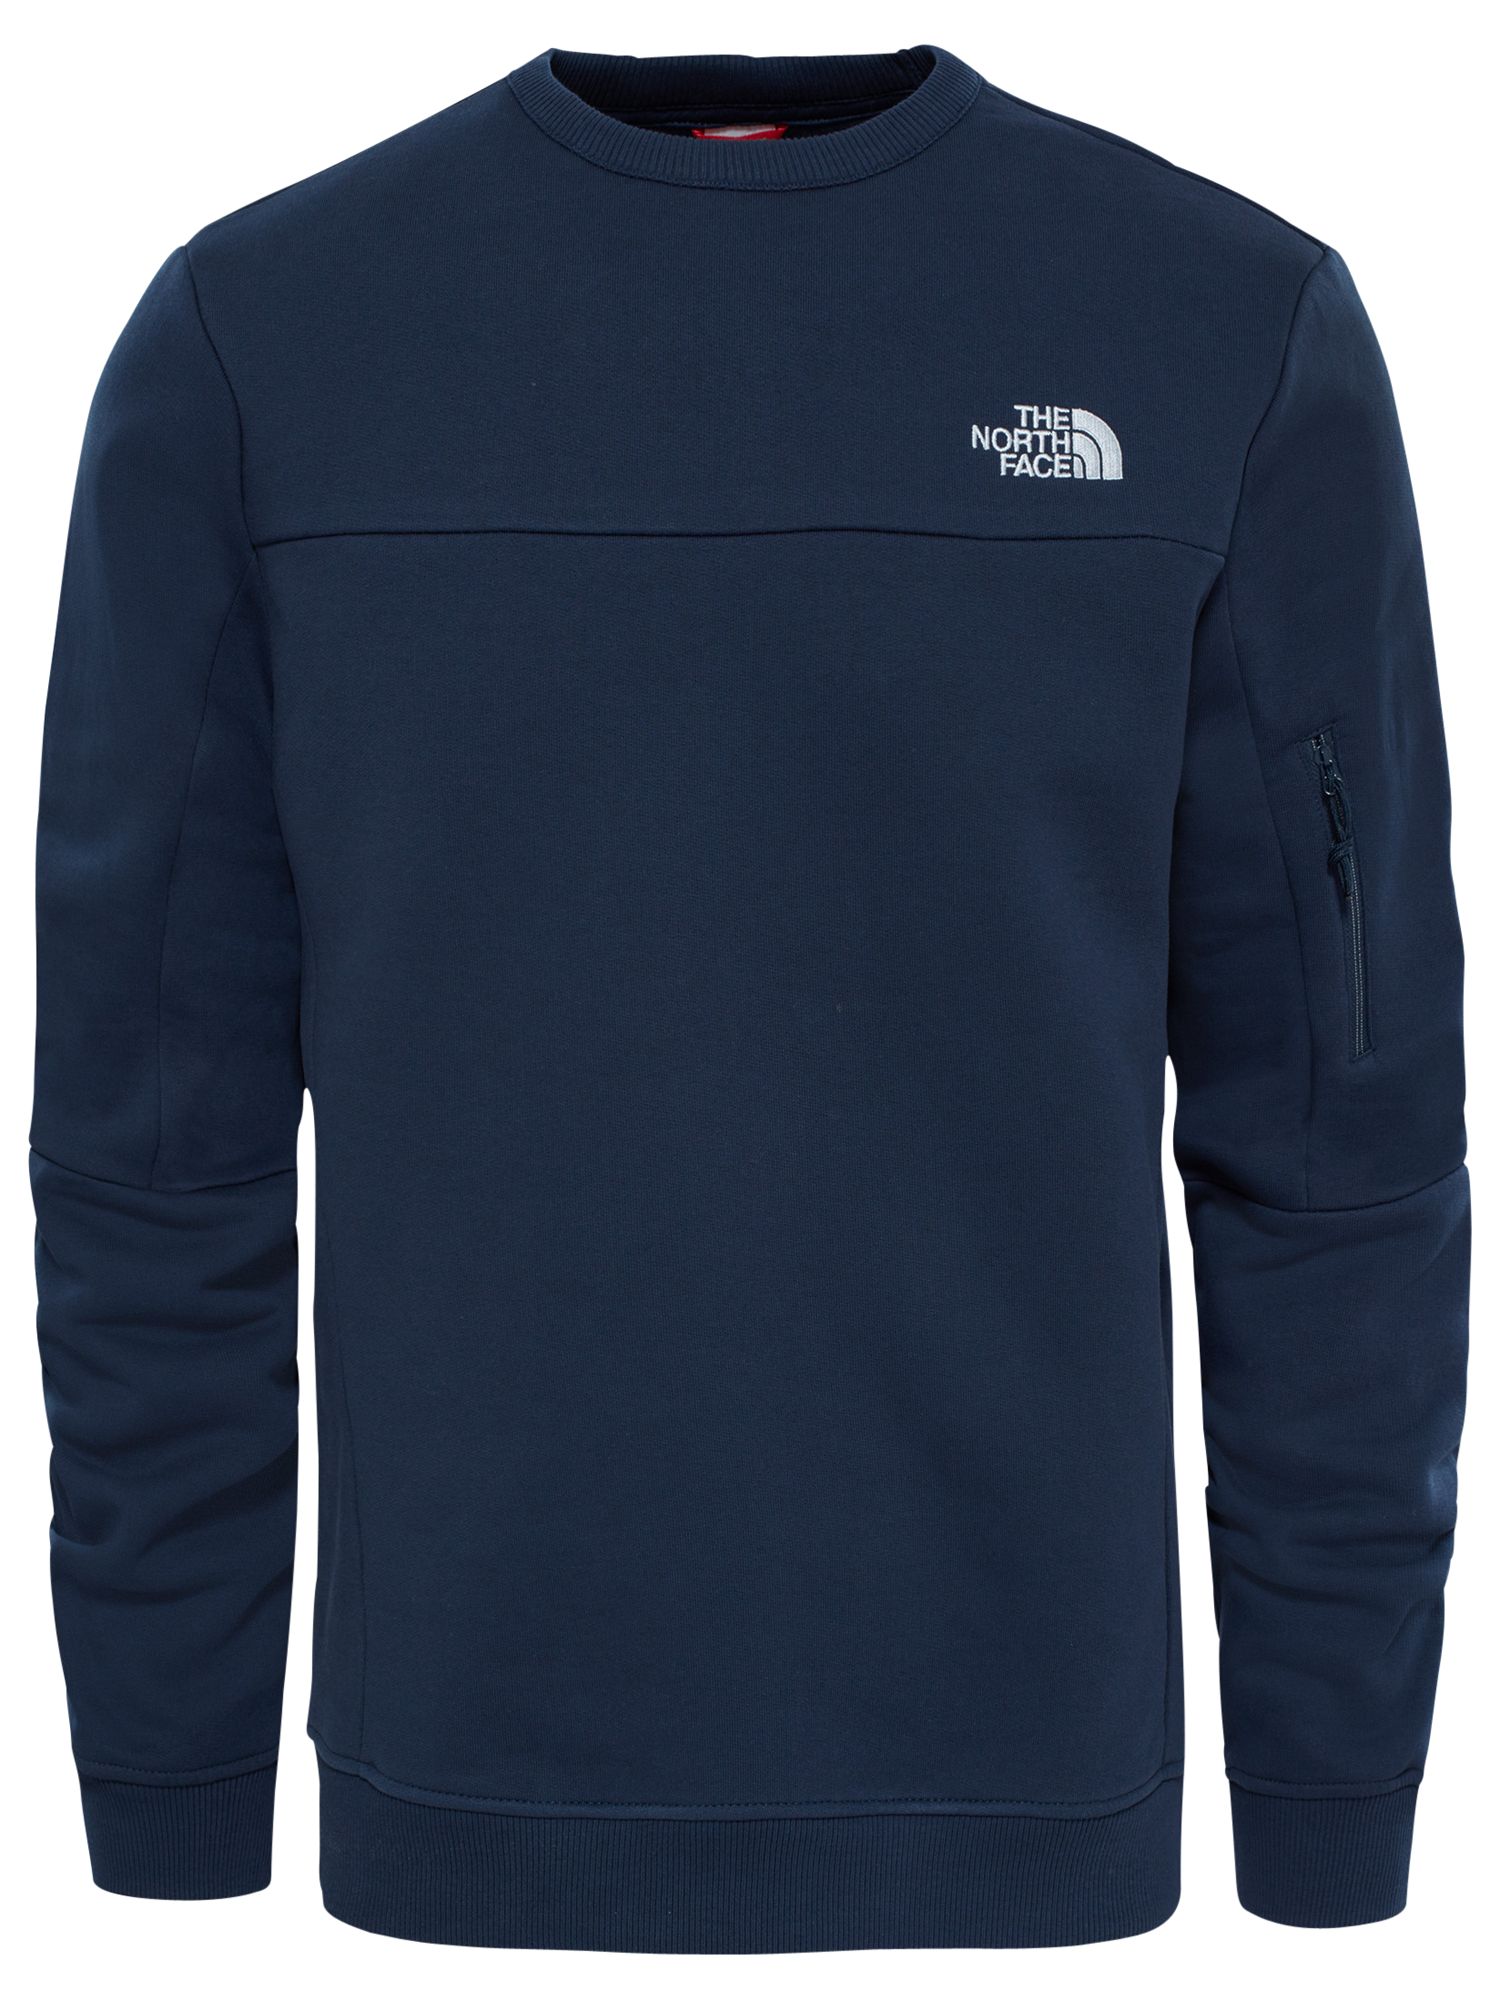 north face navy sweatshirt